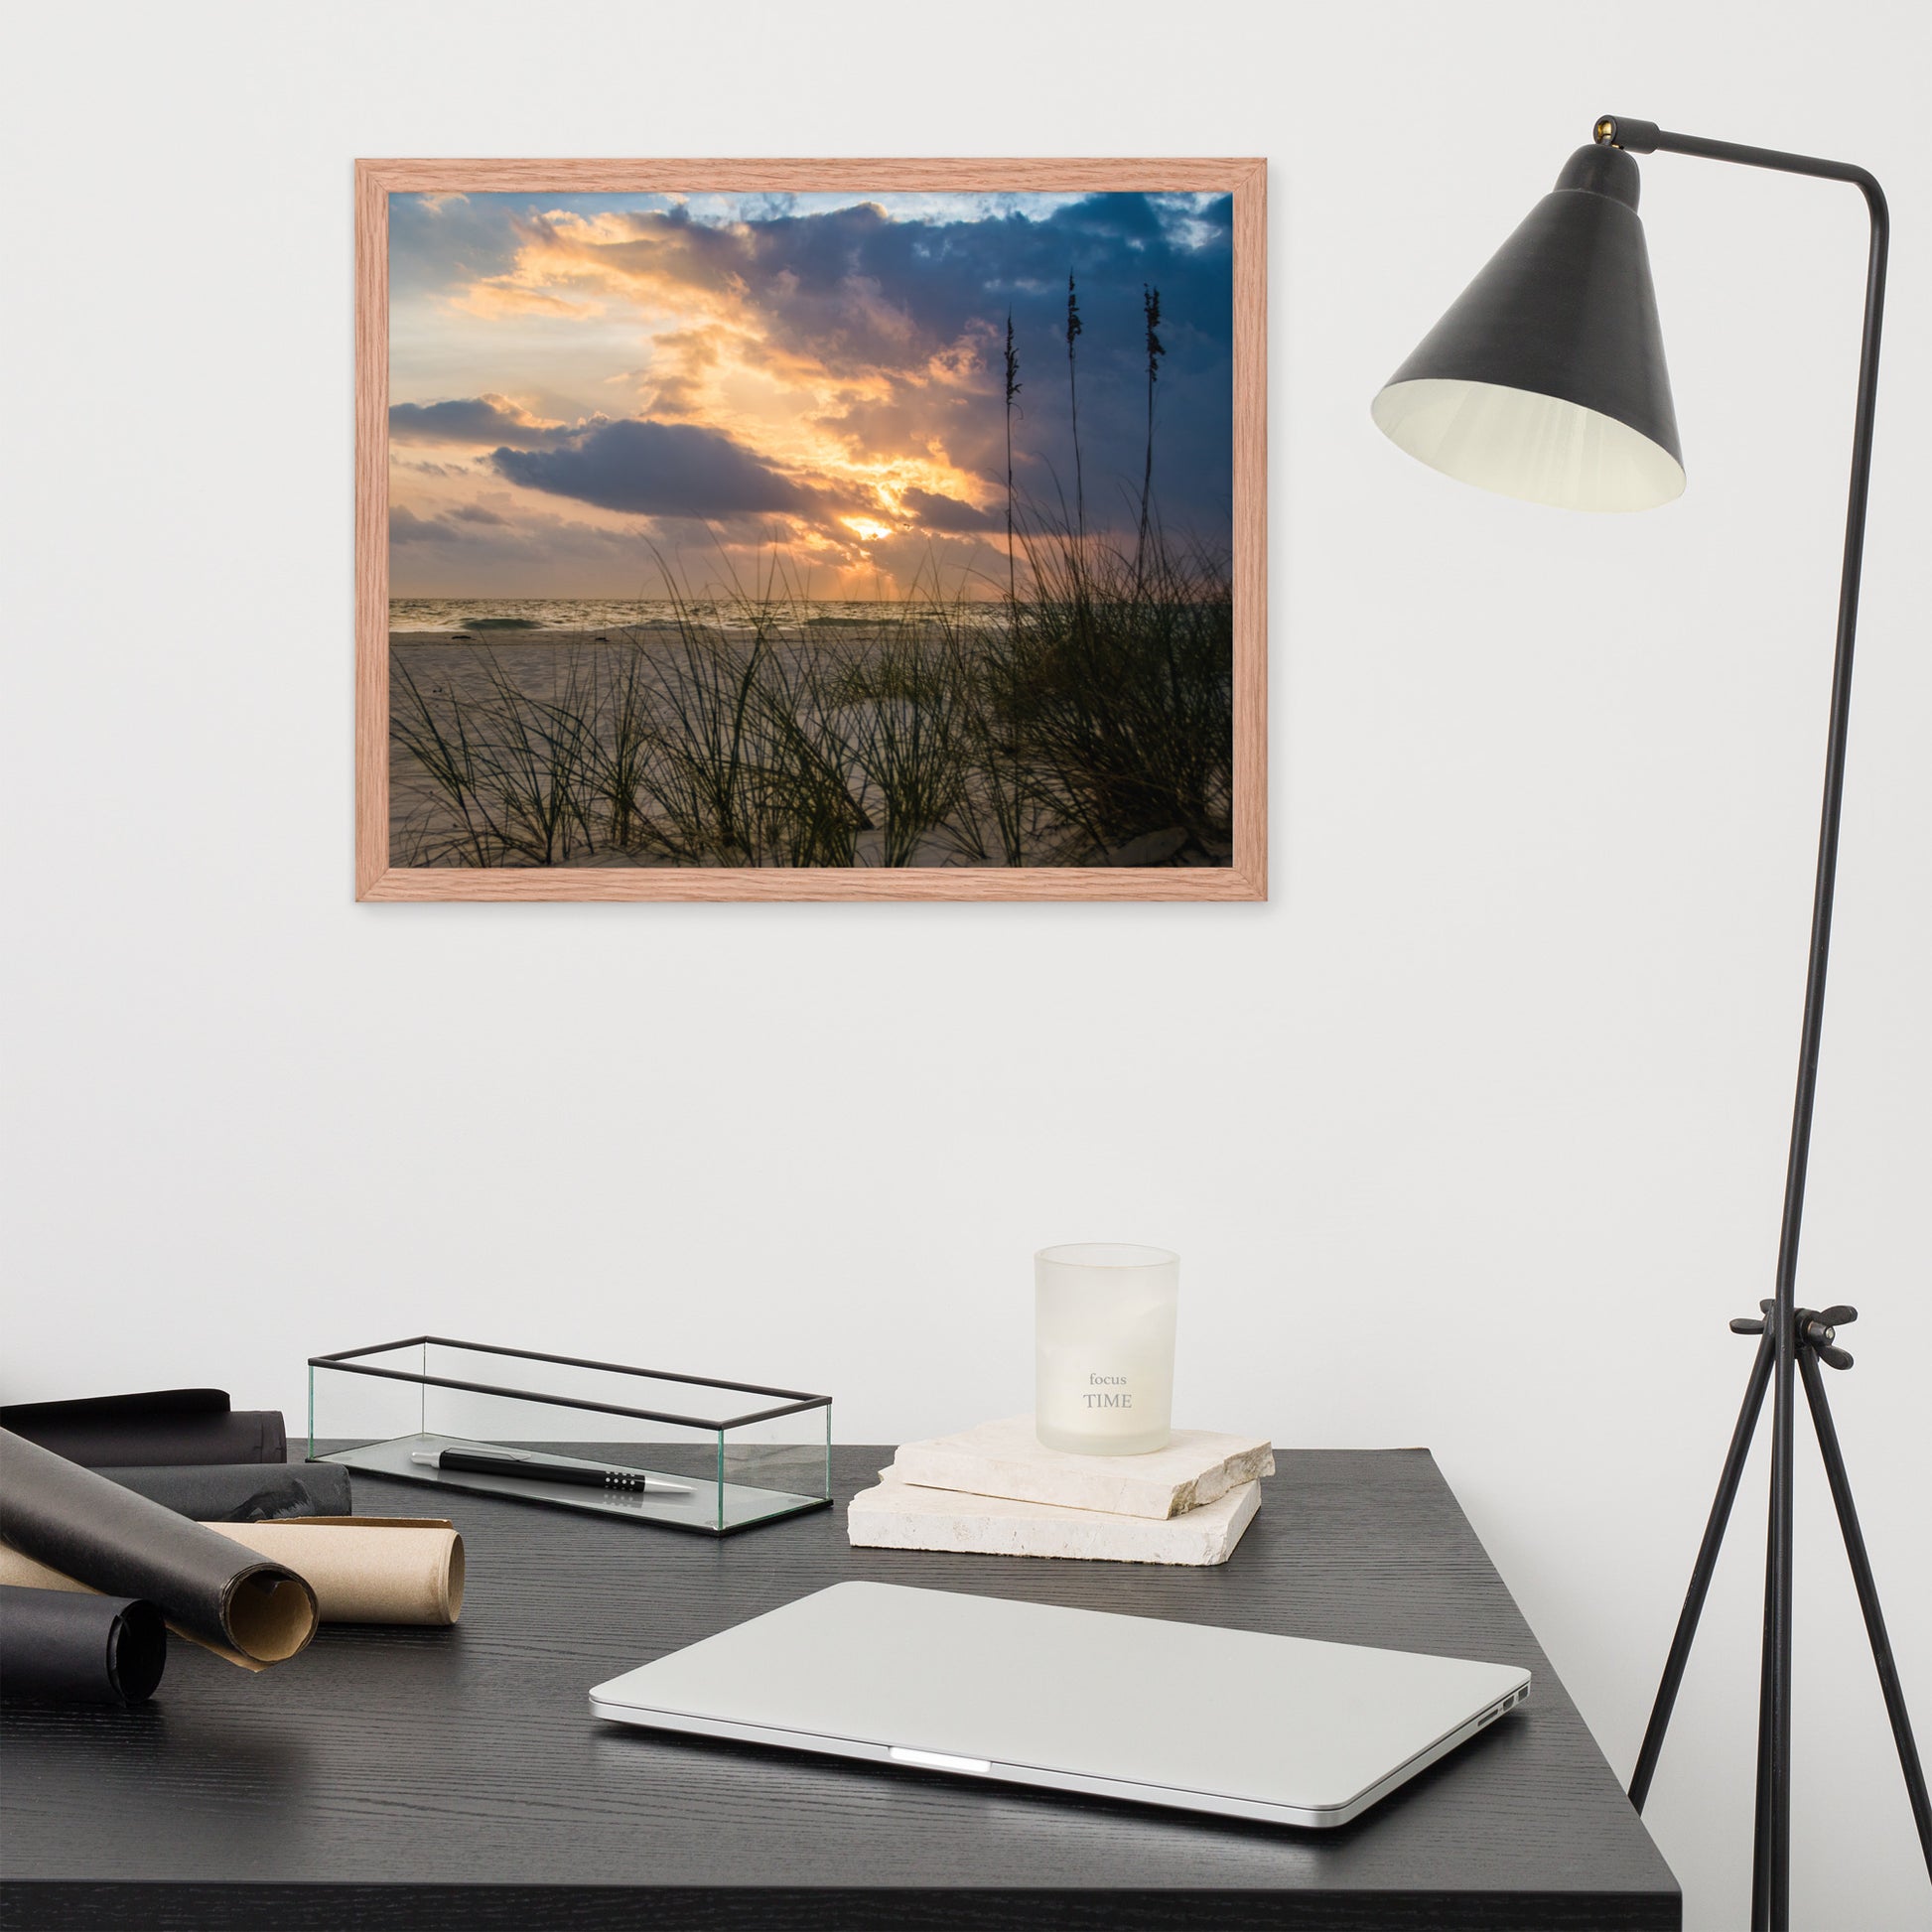 Framed Beach Pictures For Sale: Anna Maria Island Cloudy Beach Sunset 2 - Coastal / Beach / Seascape / Nature / Landscape Photo Framed Wall Art Print - Artwork